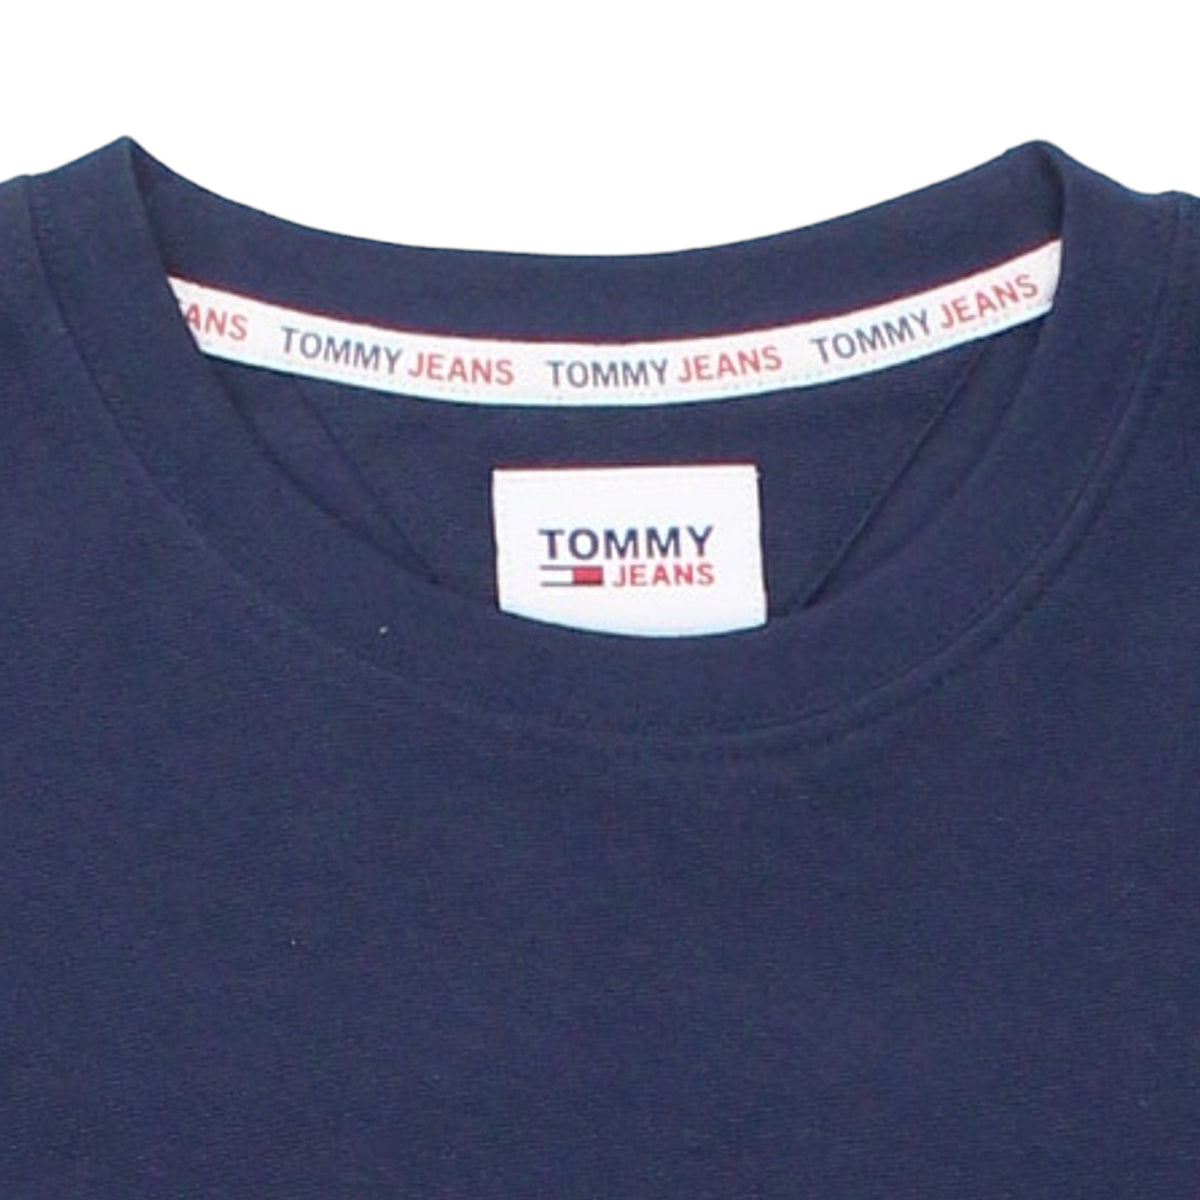 Tommy Jeans Navy Sweatshirt